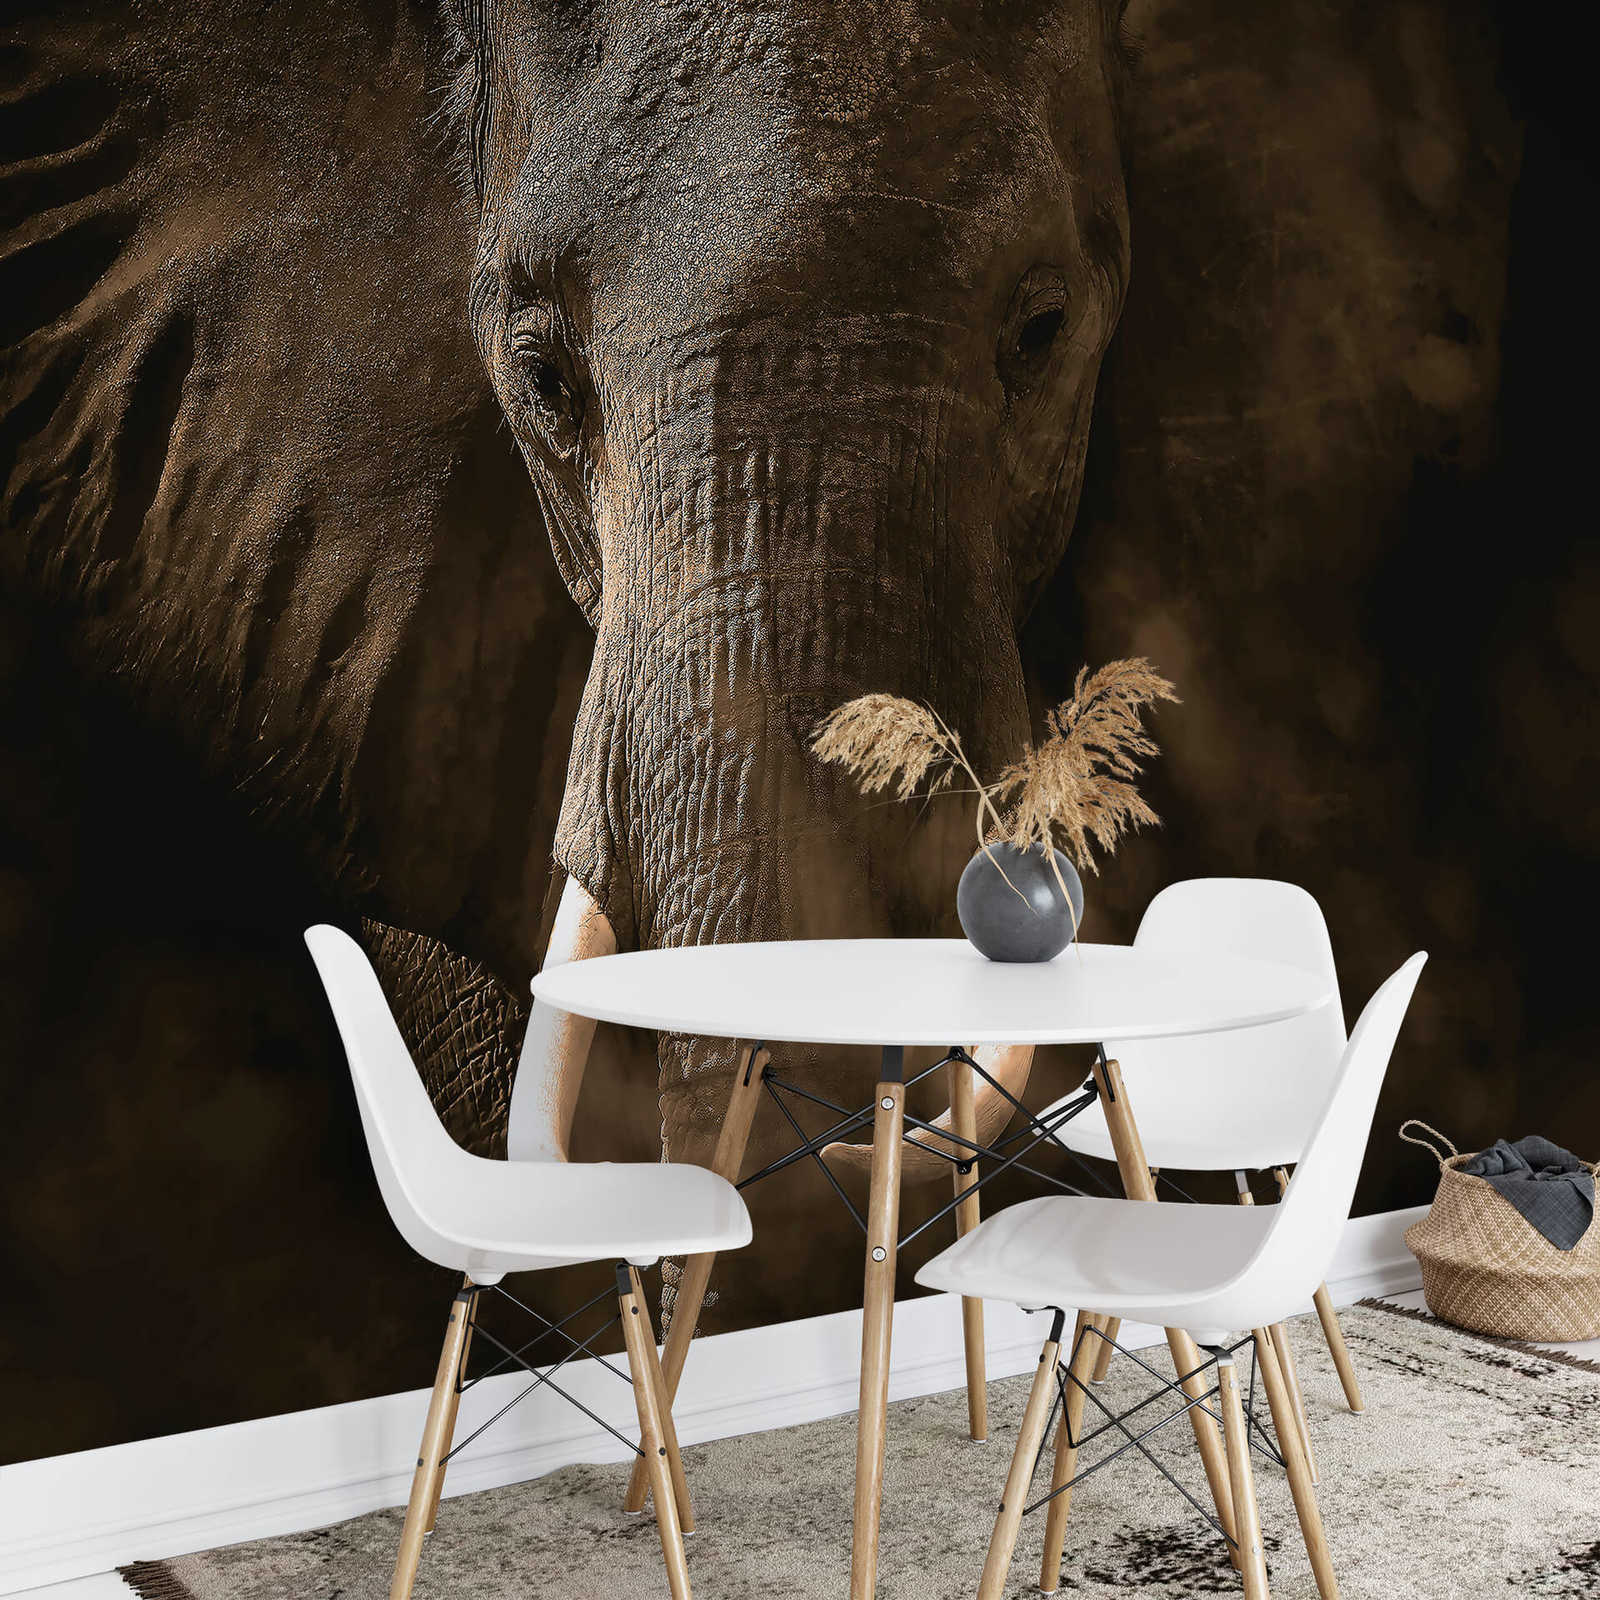             Carta da parati Safari Animal Elephant - Grigio, marrone, bianco
        